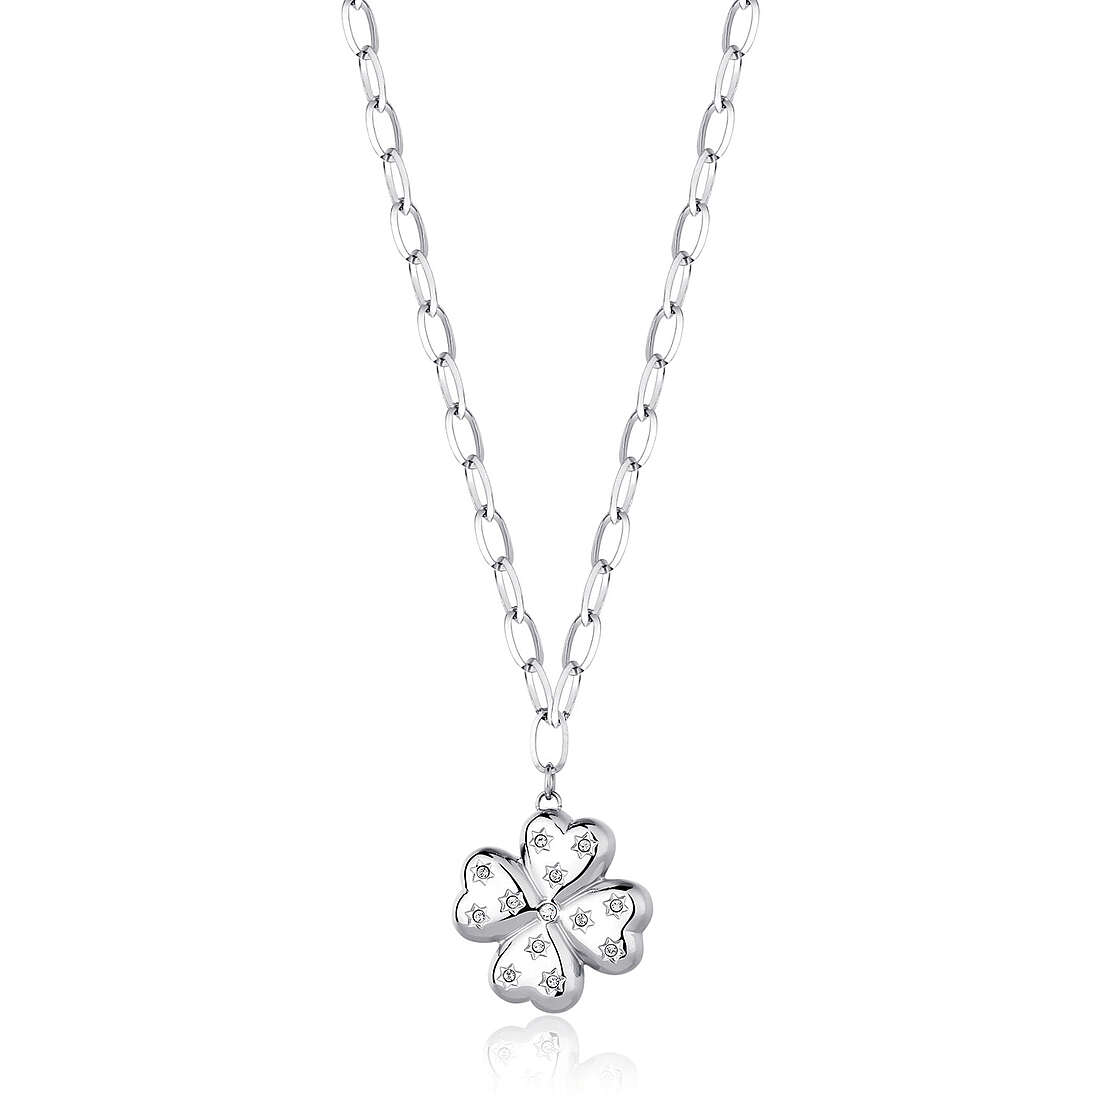 necklace jewel Steel woman jewel Crystals SSE03